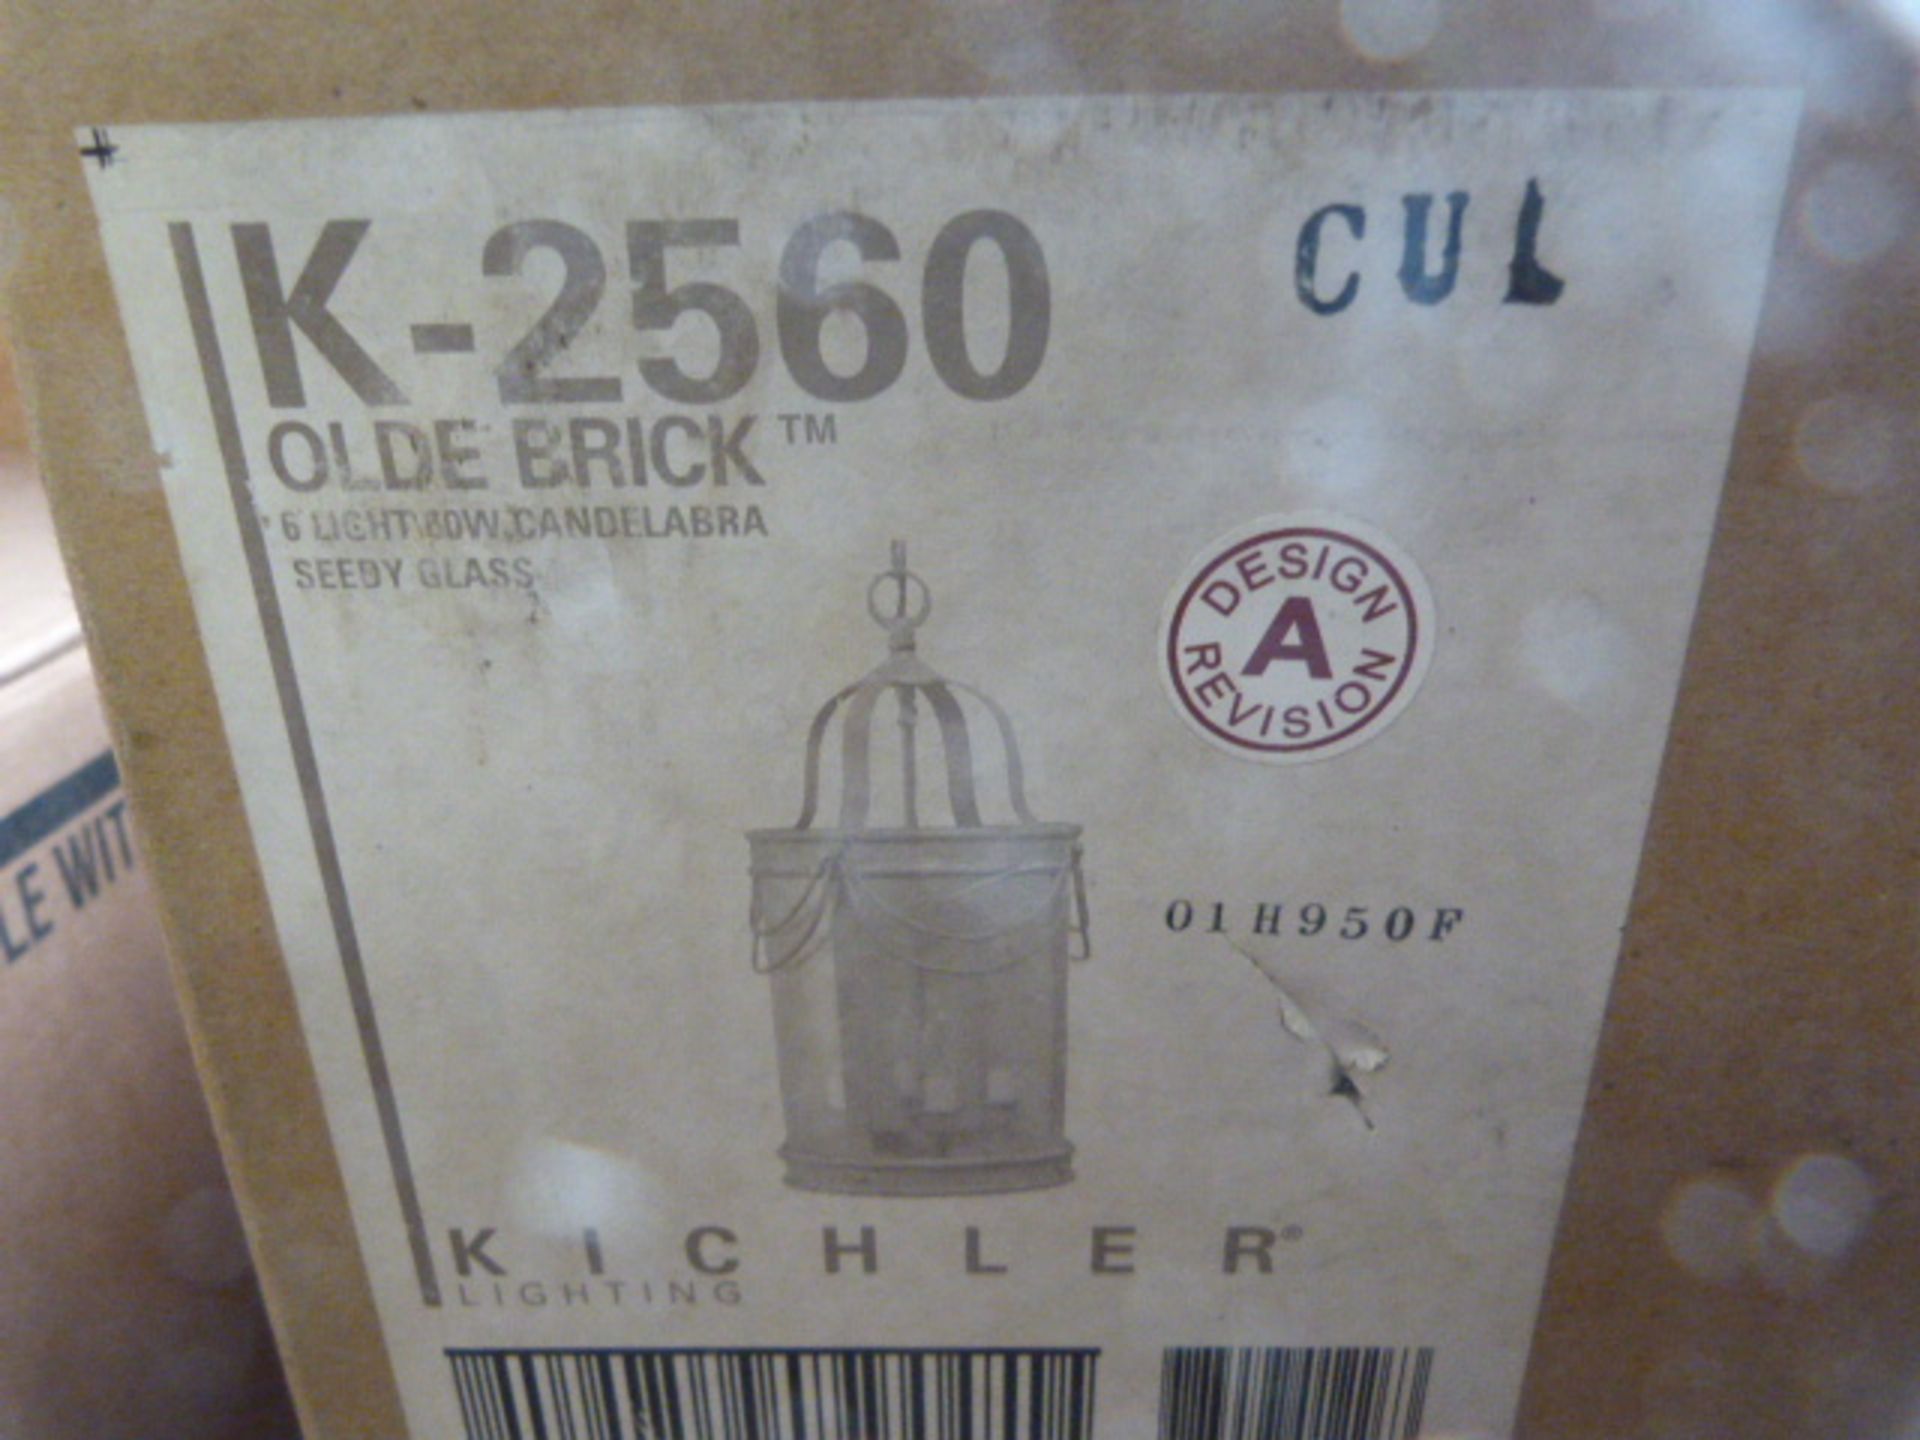 *K-2560 Old Brick Six Light Candelabra with Seedy Glass - Image 3 of 3